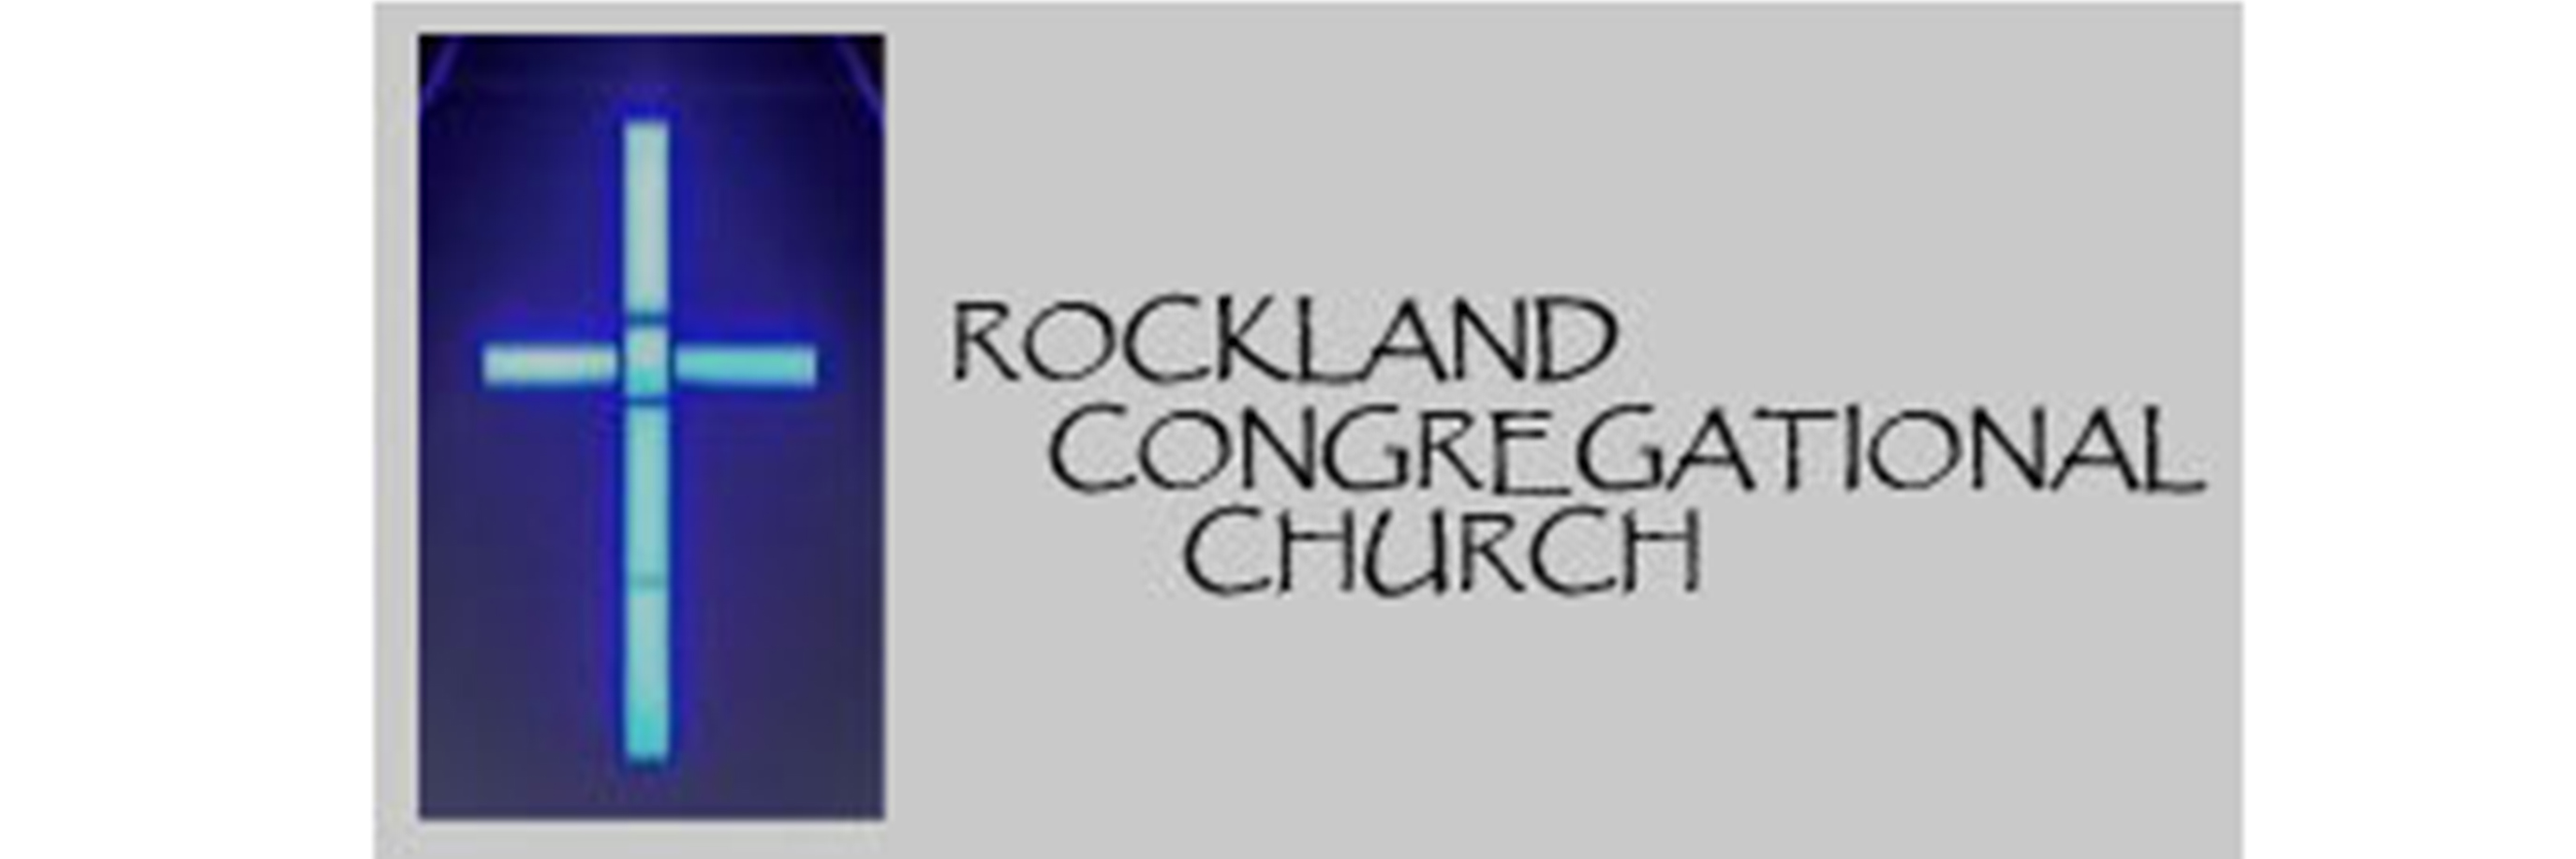 Rockland Congregational Church